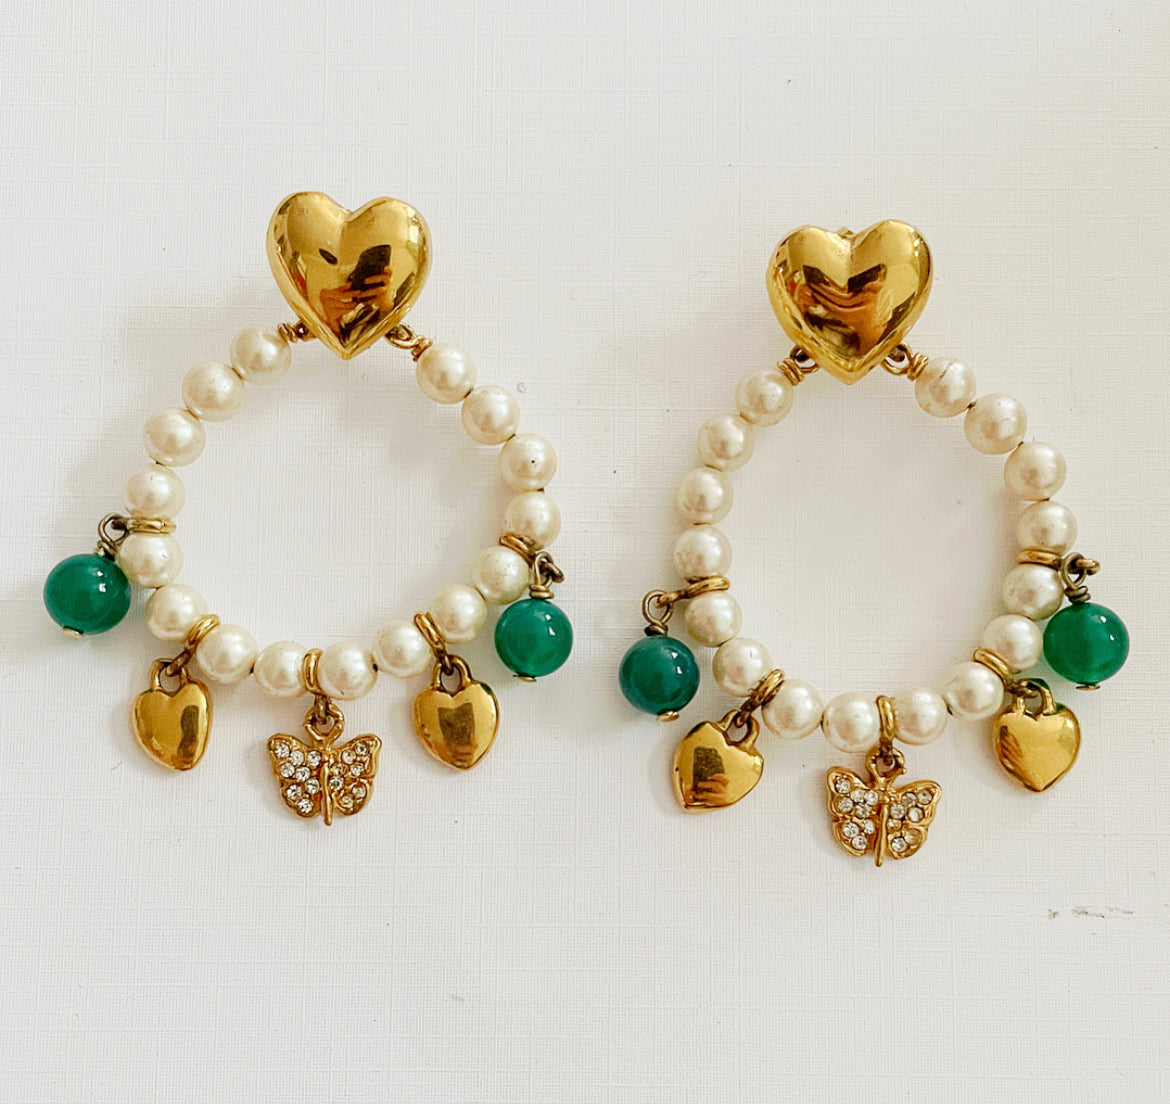 Vintage heart charm earrings